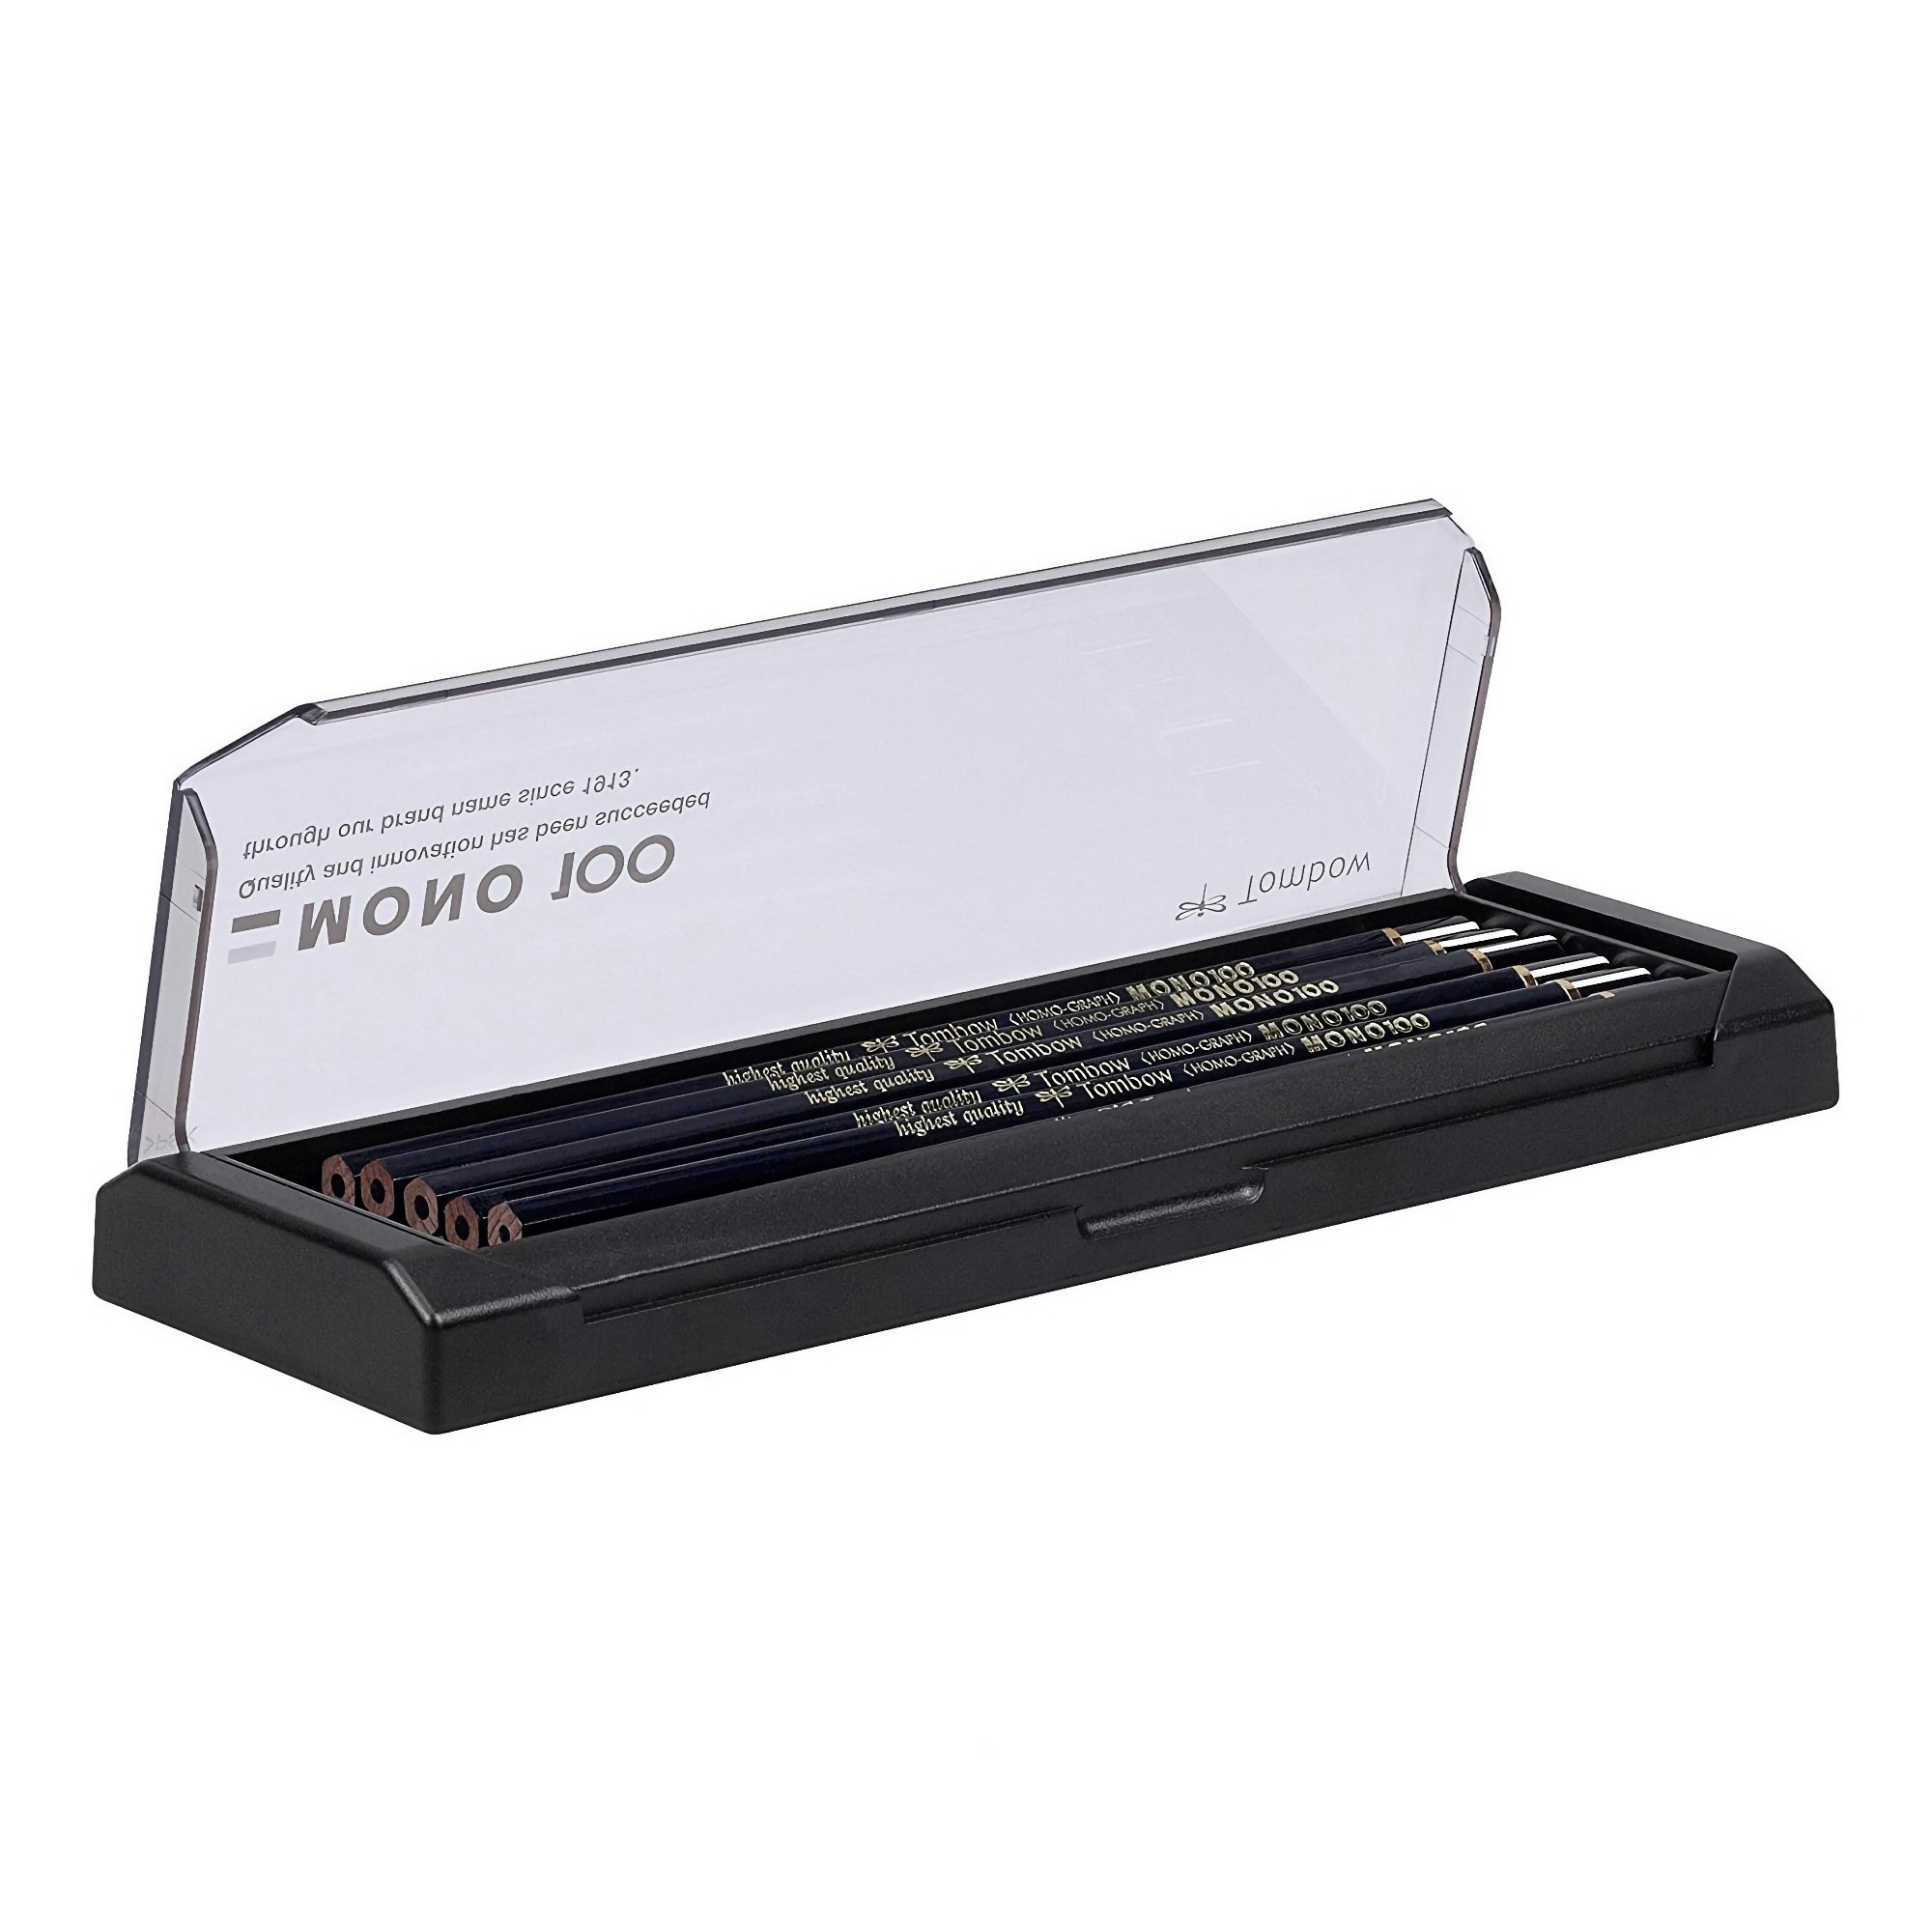 Tombow Mono 100 Pencil – 3B – set om 12